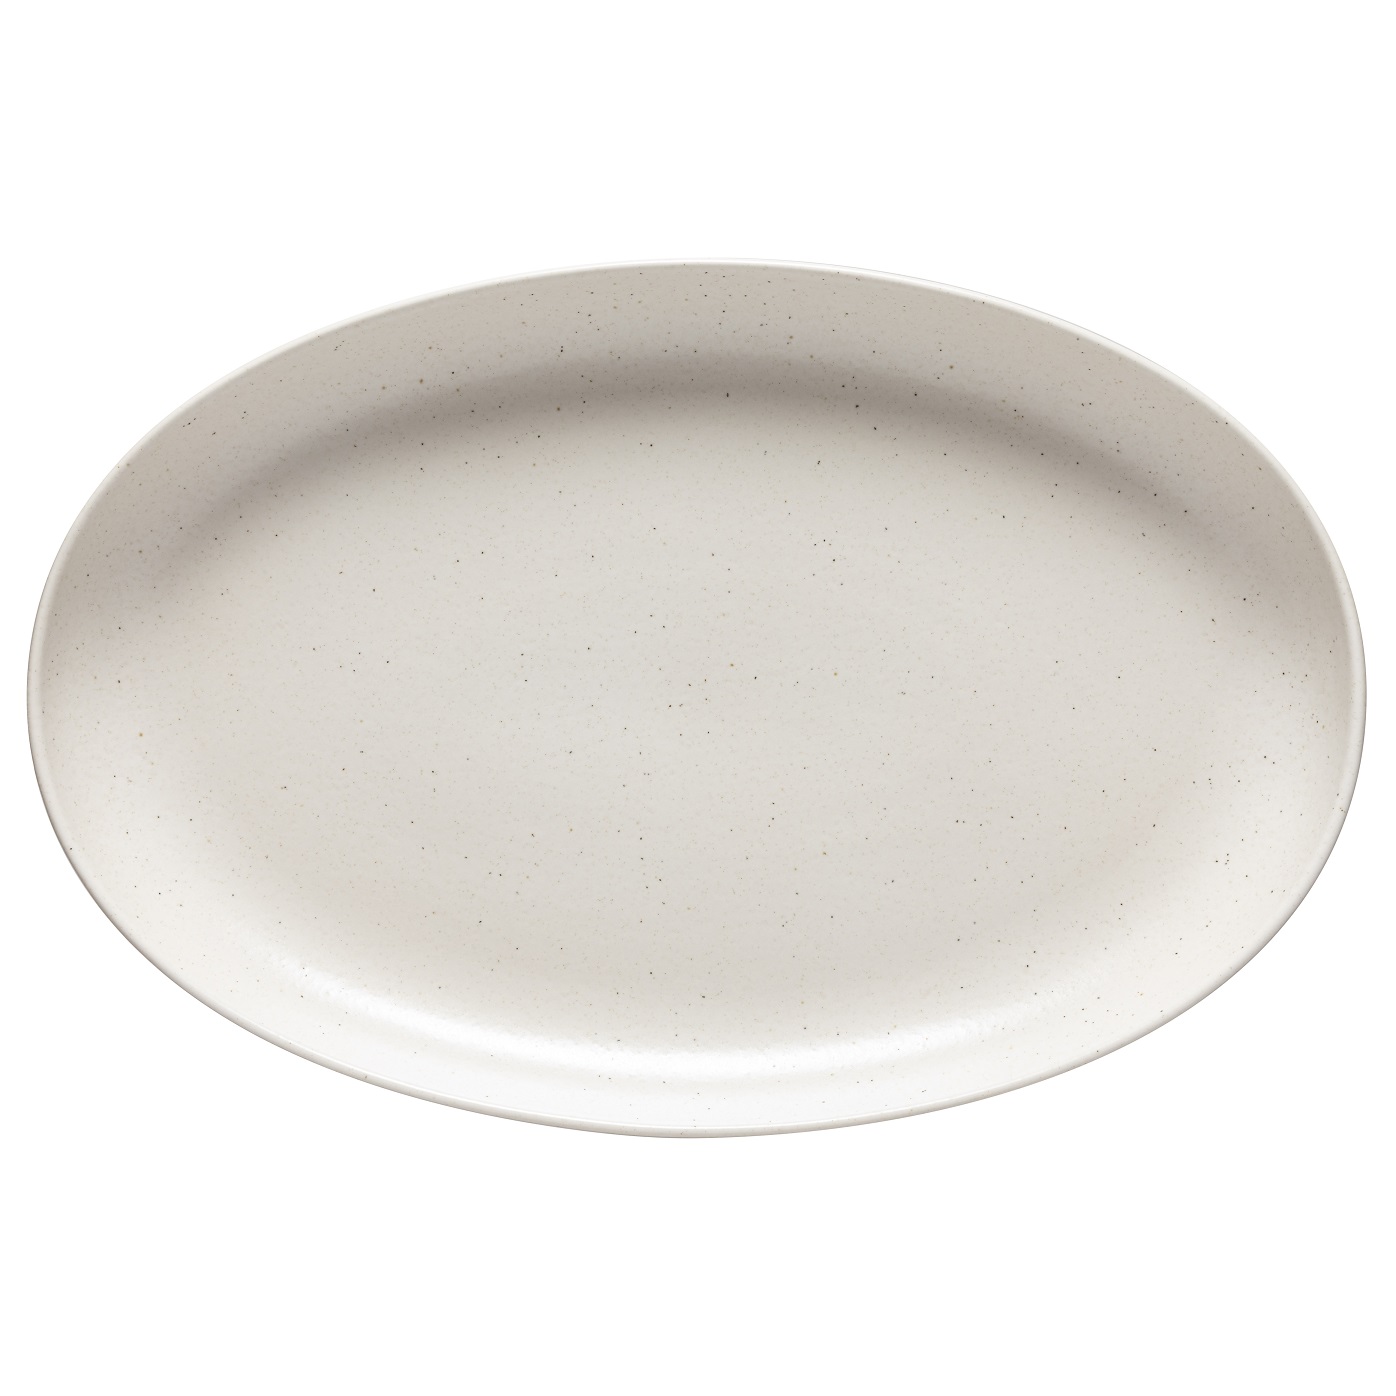 Pacifica Vanilla Oval Platter 40.8cm Gift